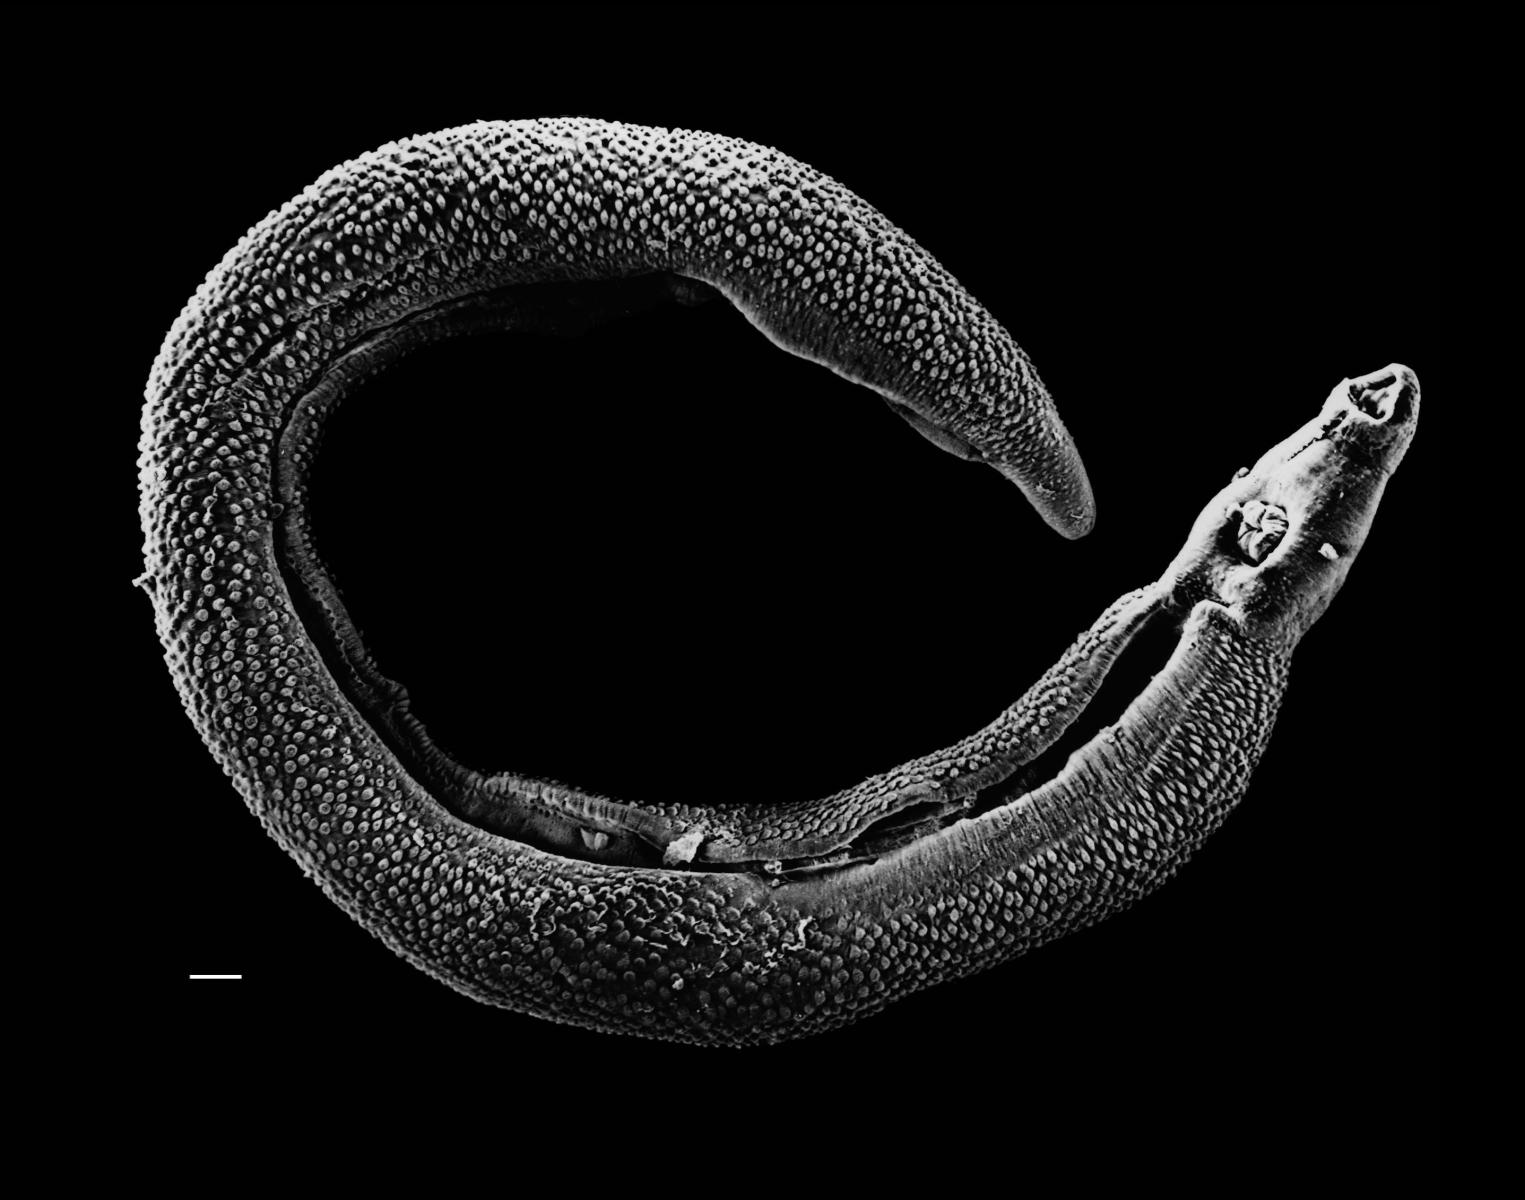 Electron micrograph of Schistosoma mansoni